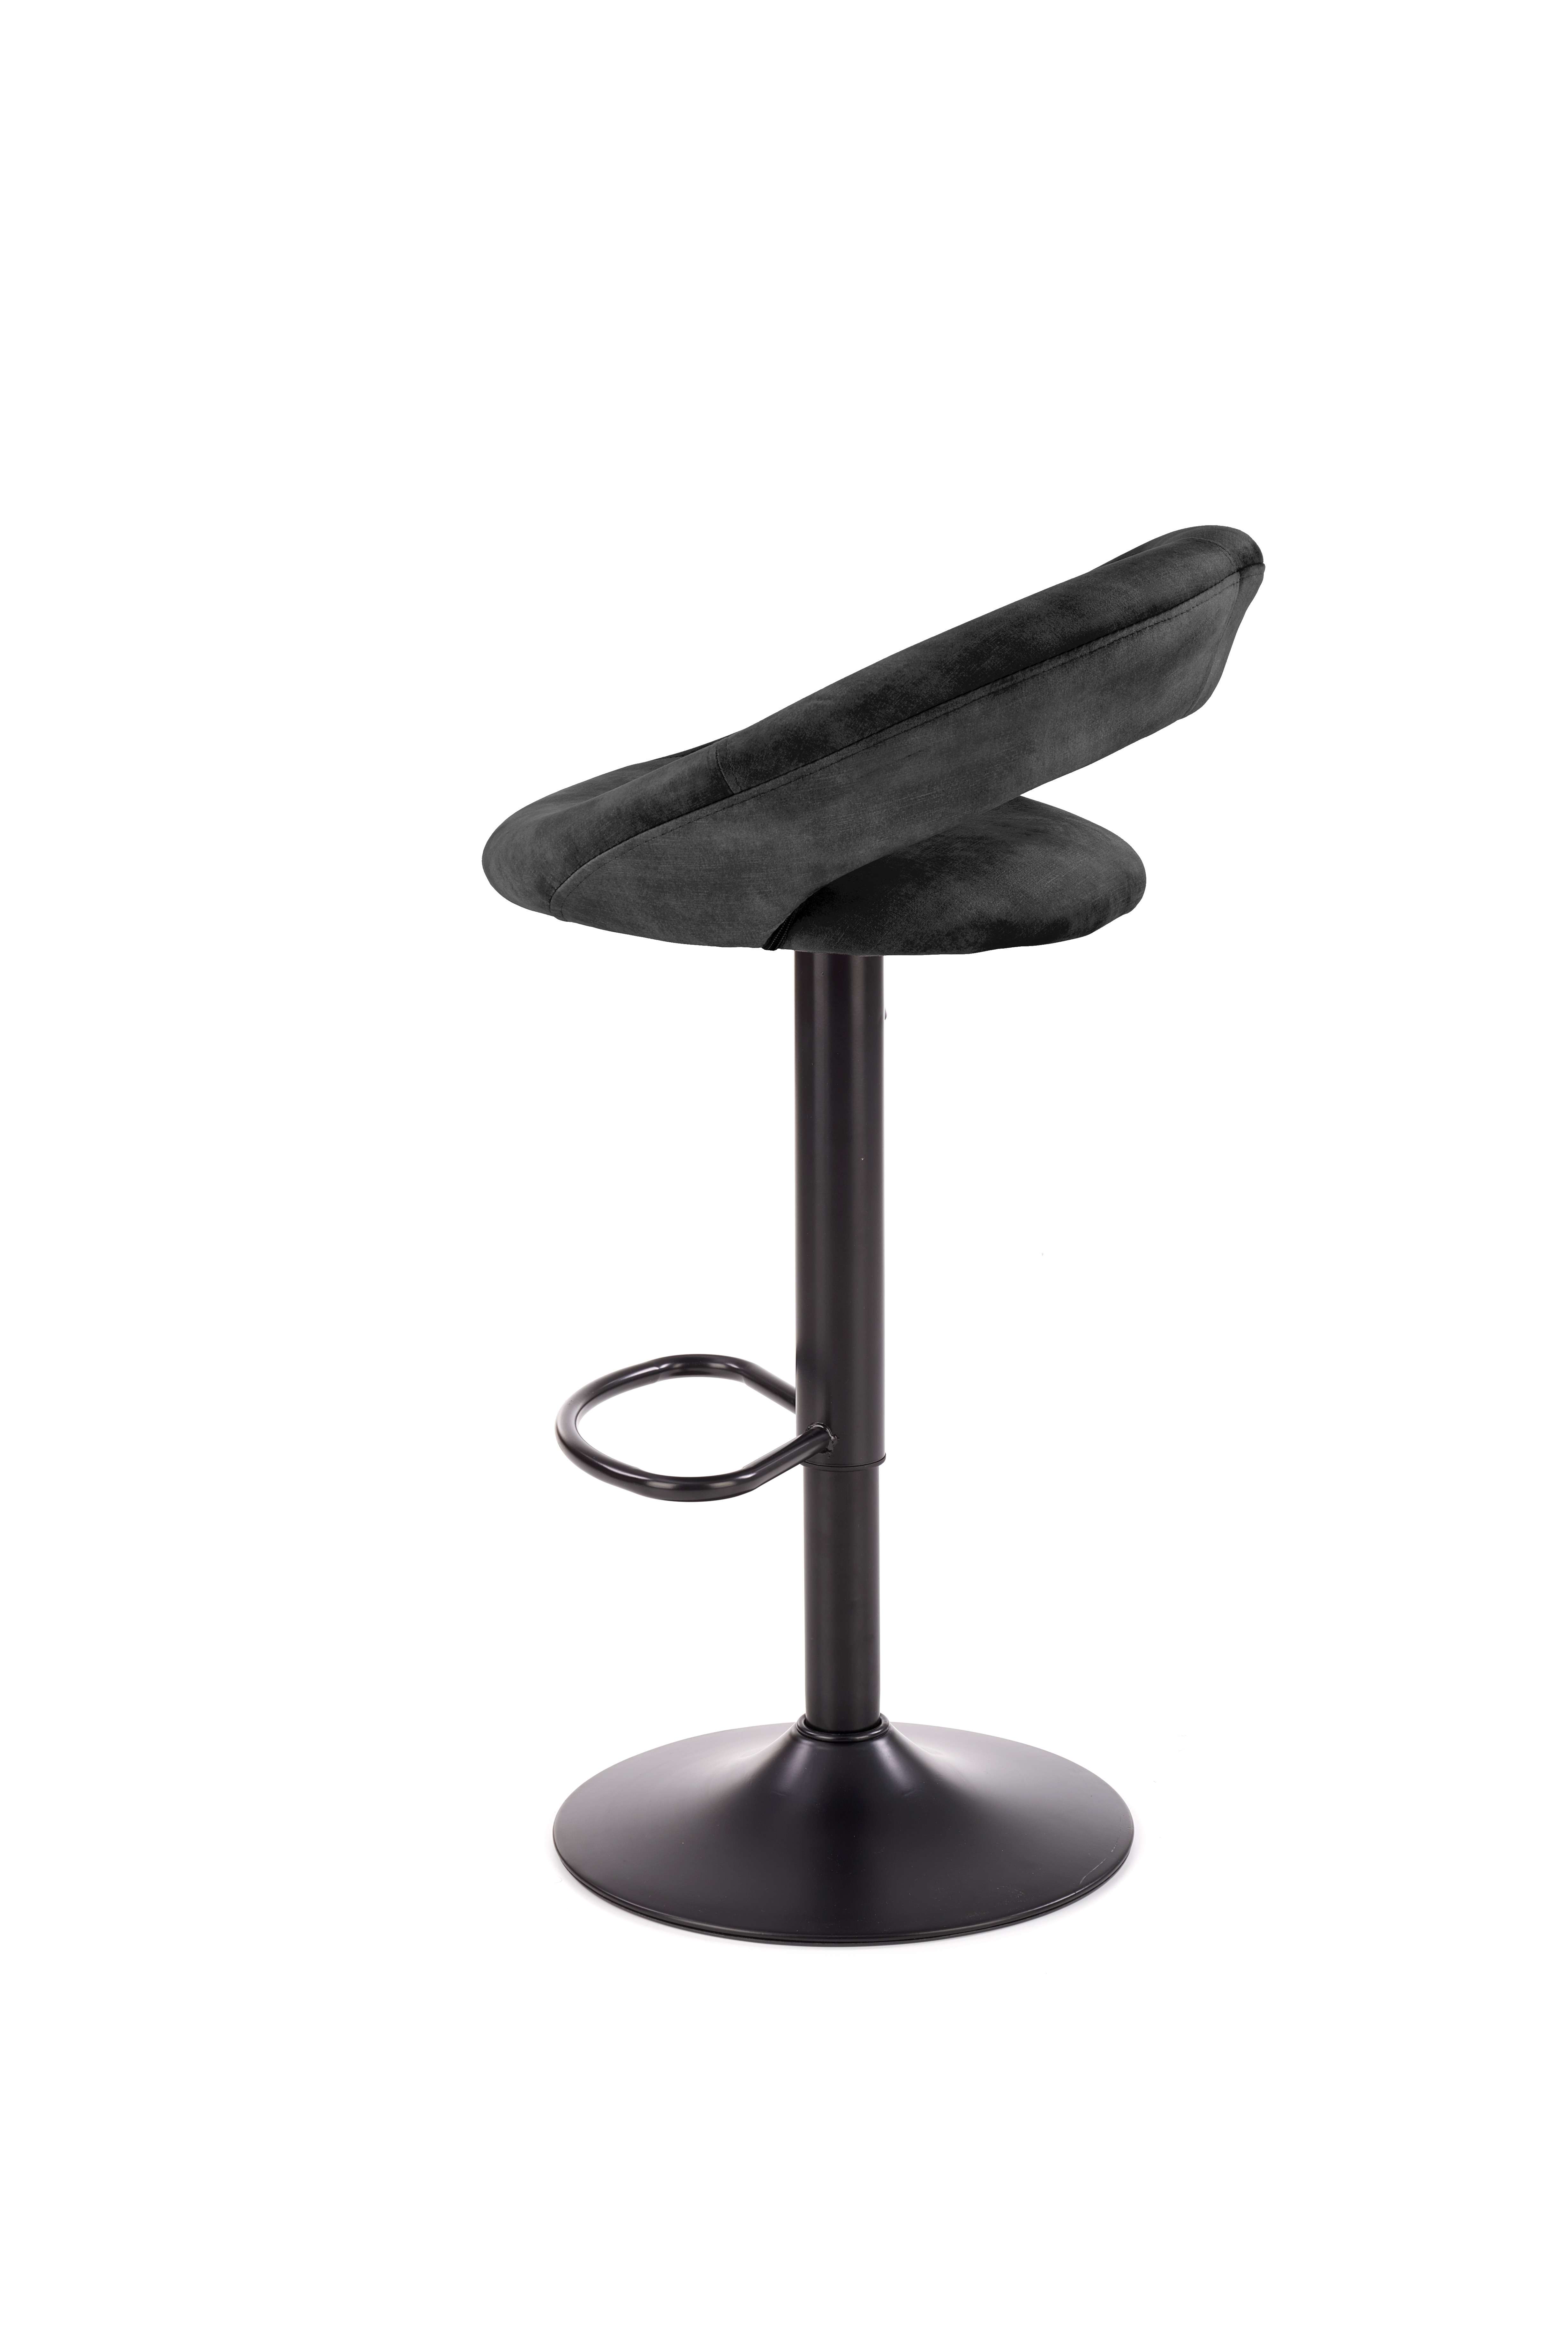 Scaun de bar H102 tapițat - negru h102 Barová židle Černý